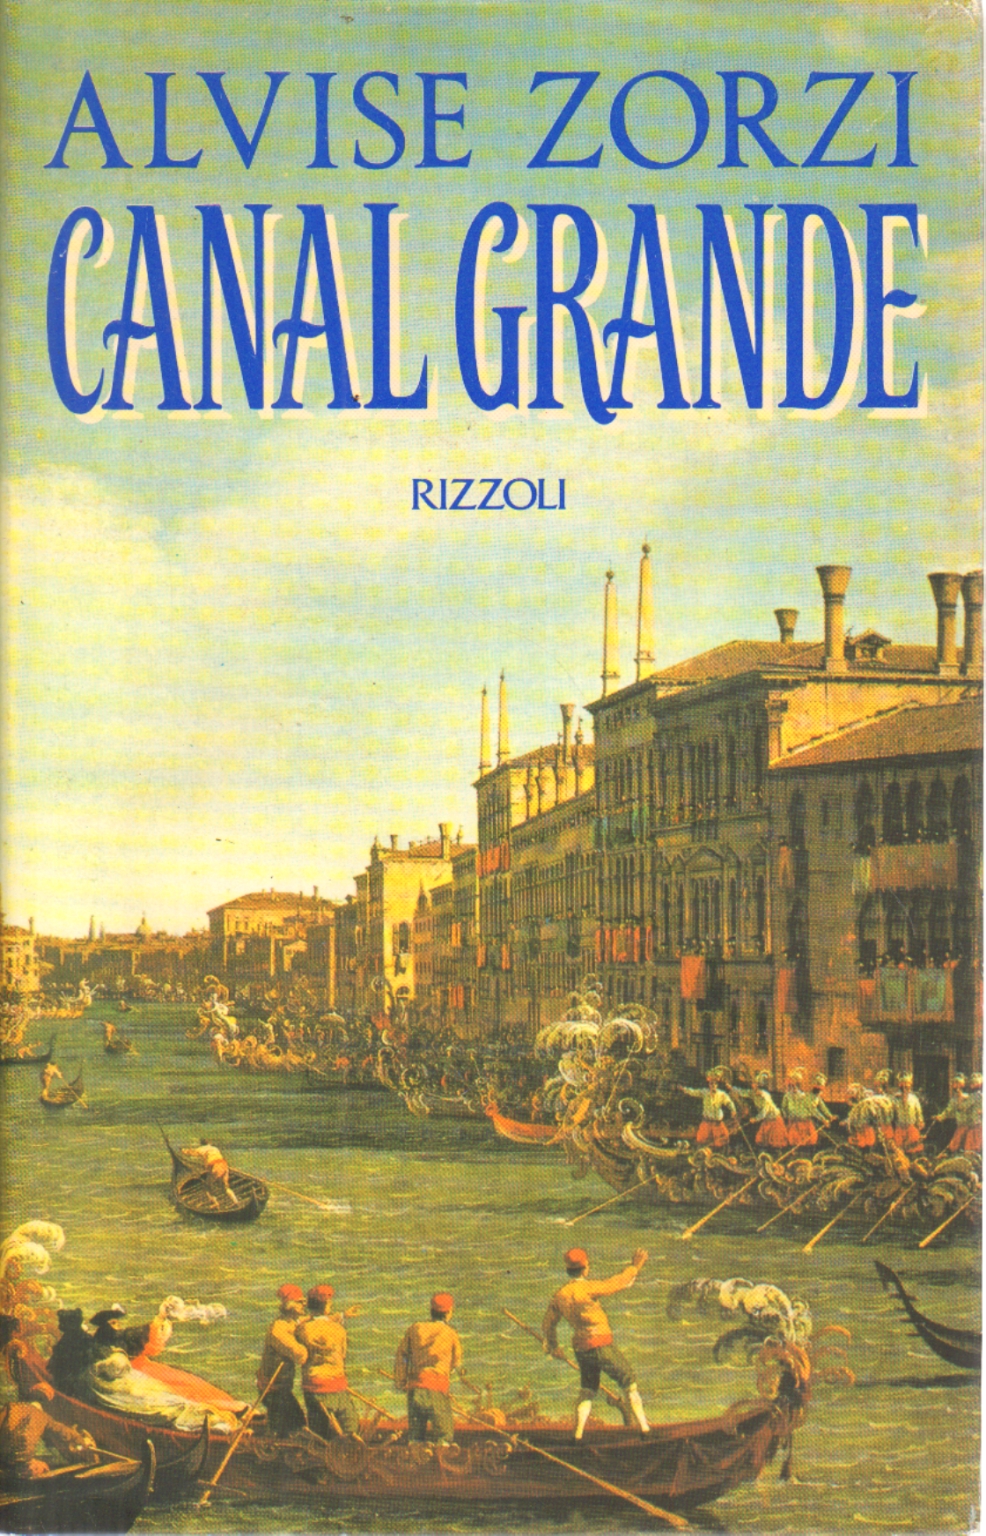 Grand Canal | Alvise Zorzi used Italian fiction